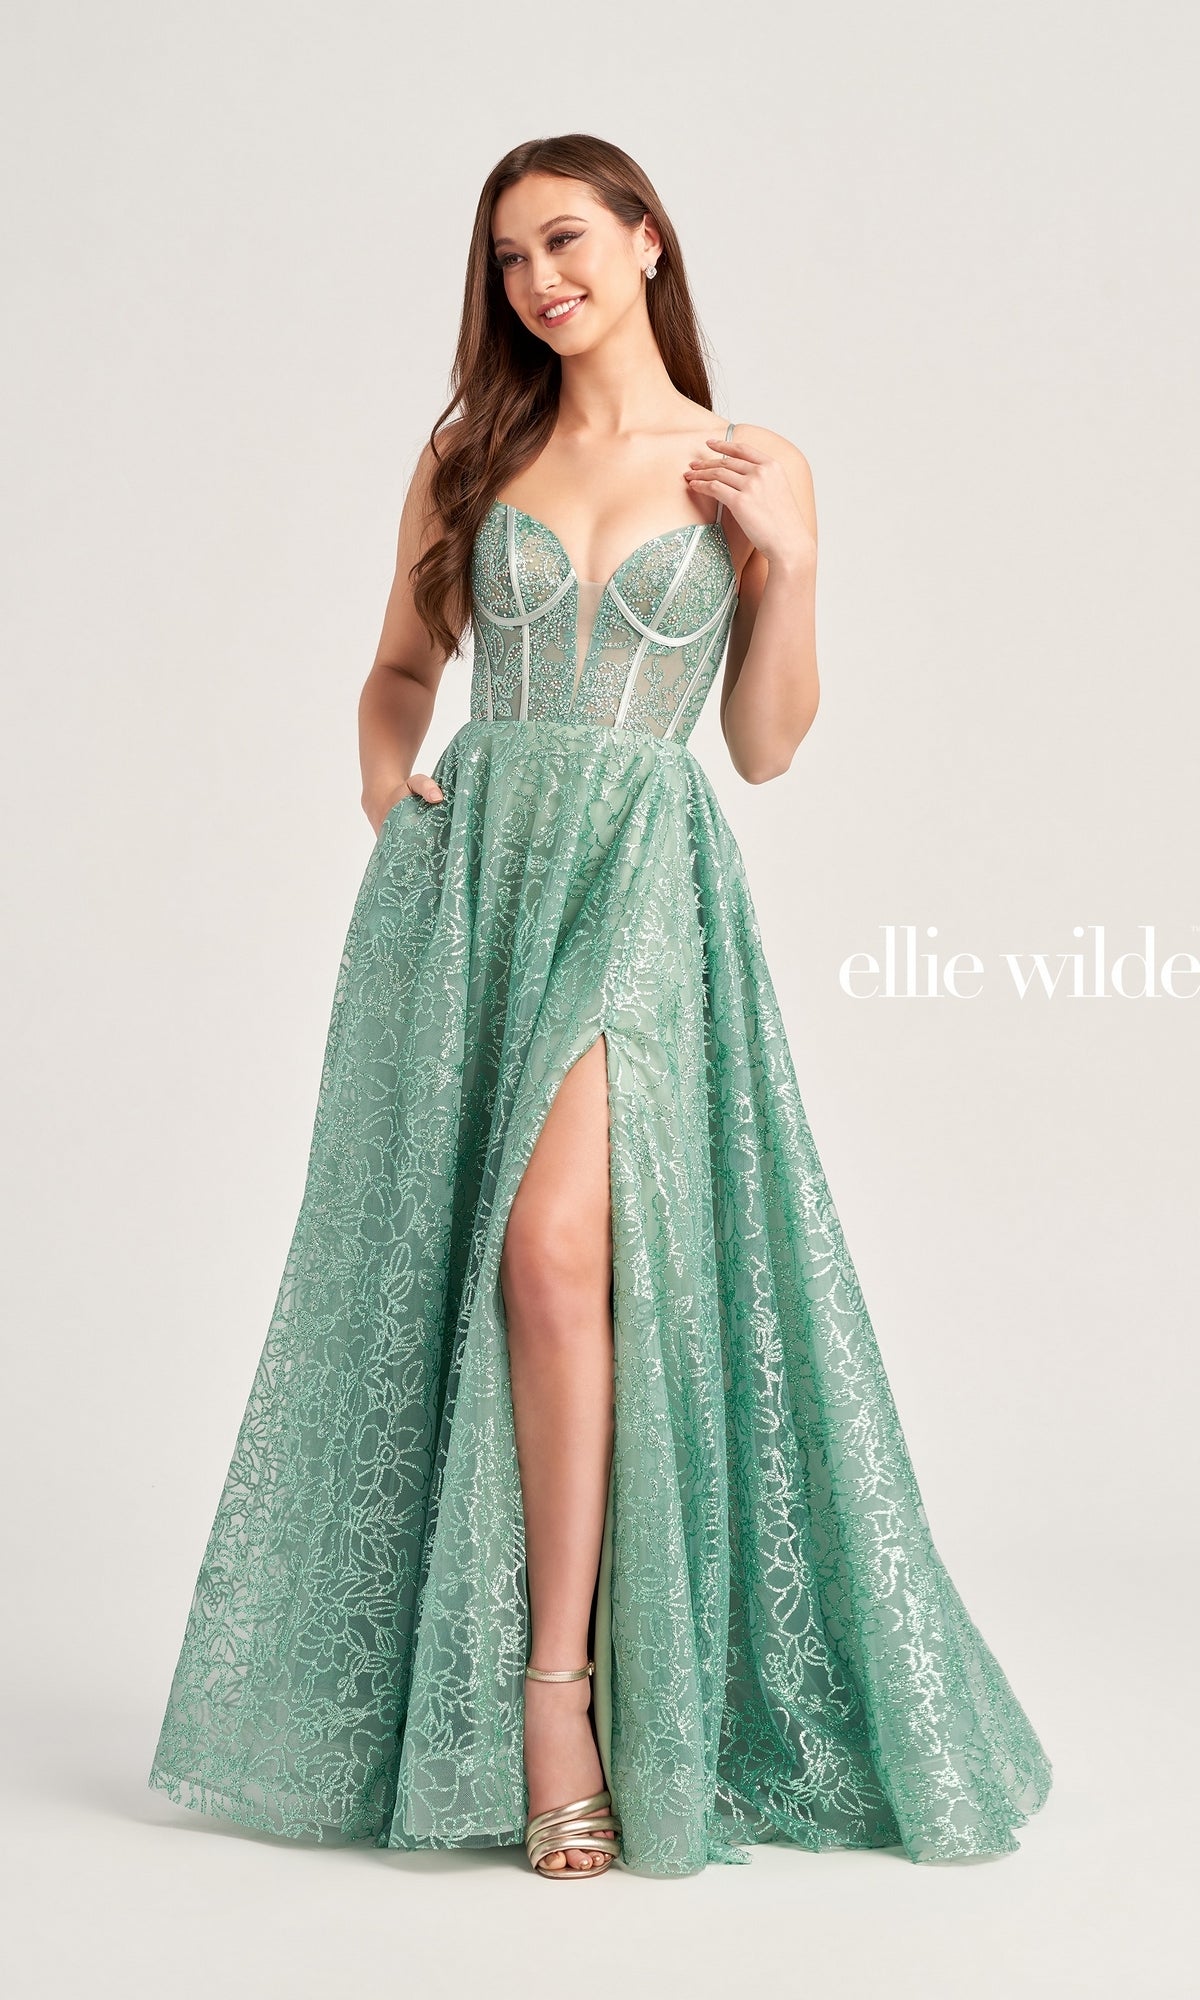 Cracked-Ice Ellie Wilde Long Prom Dress EW35216